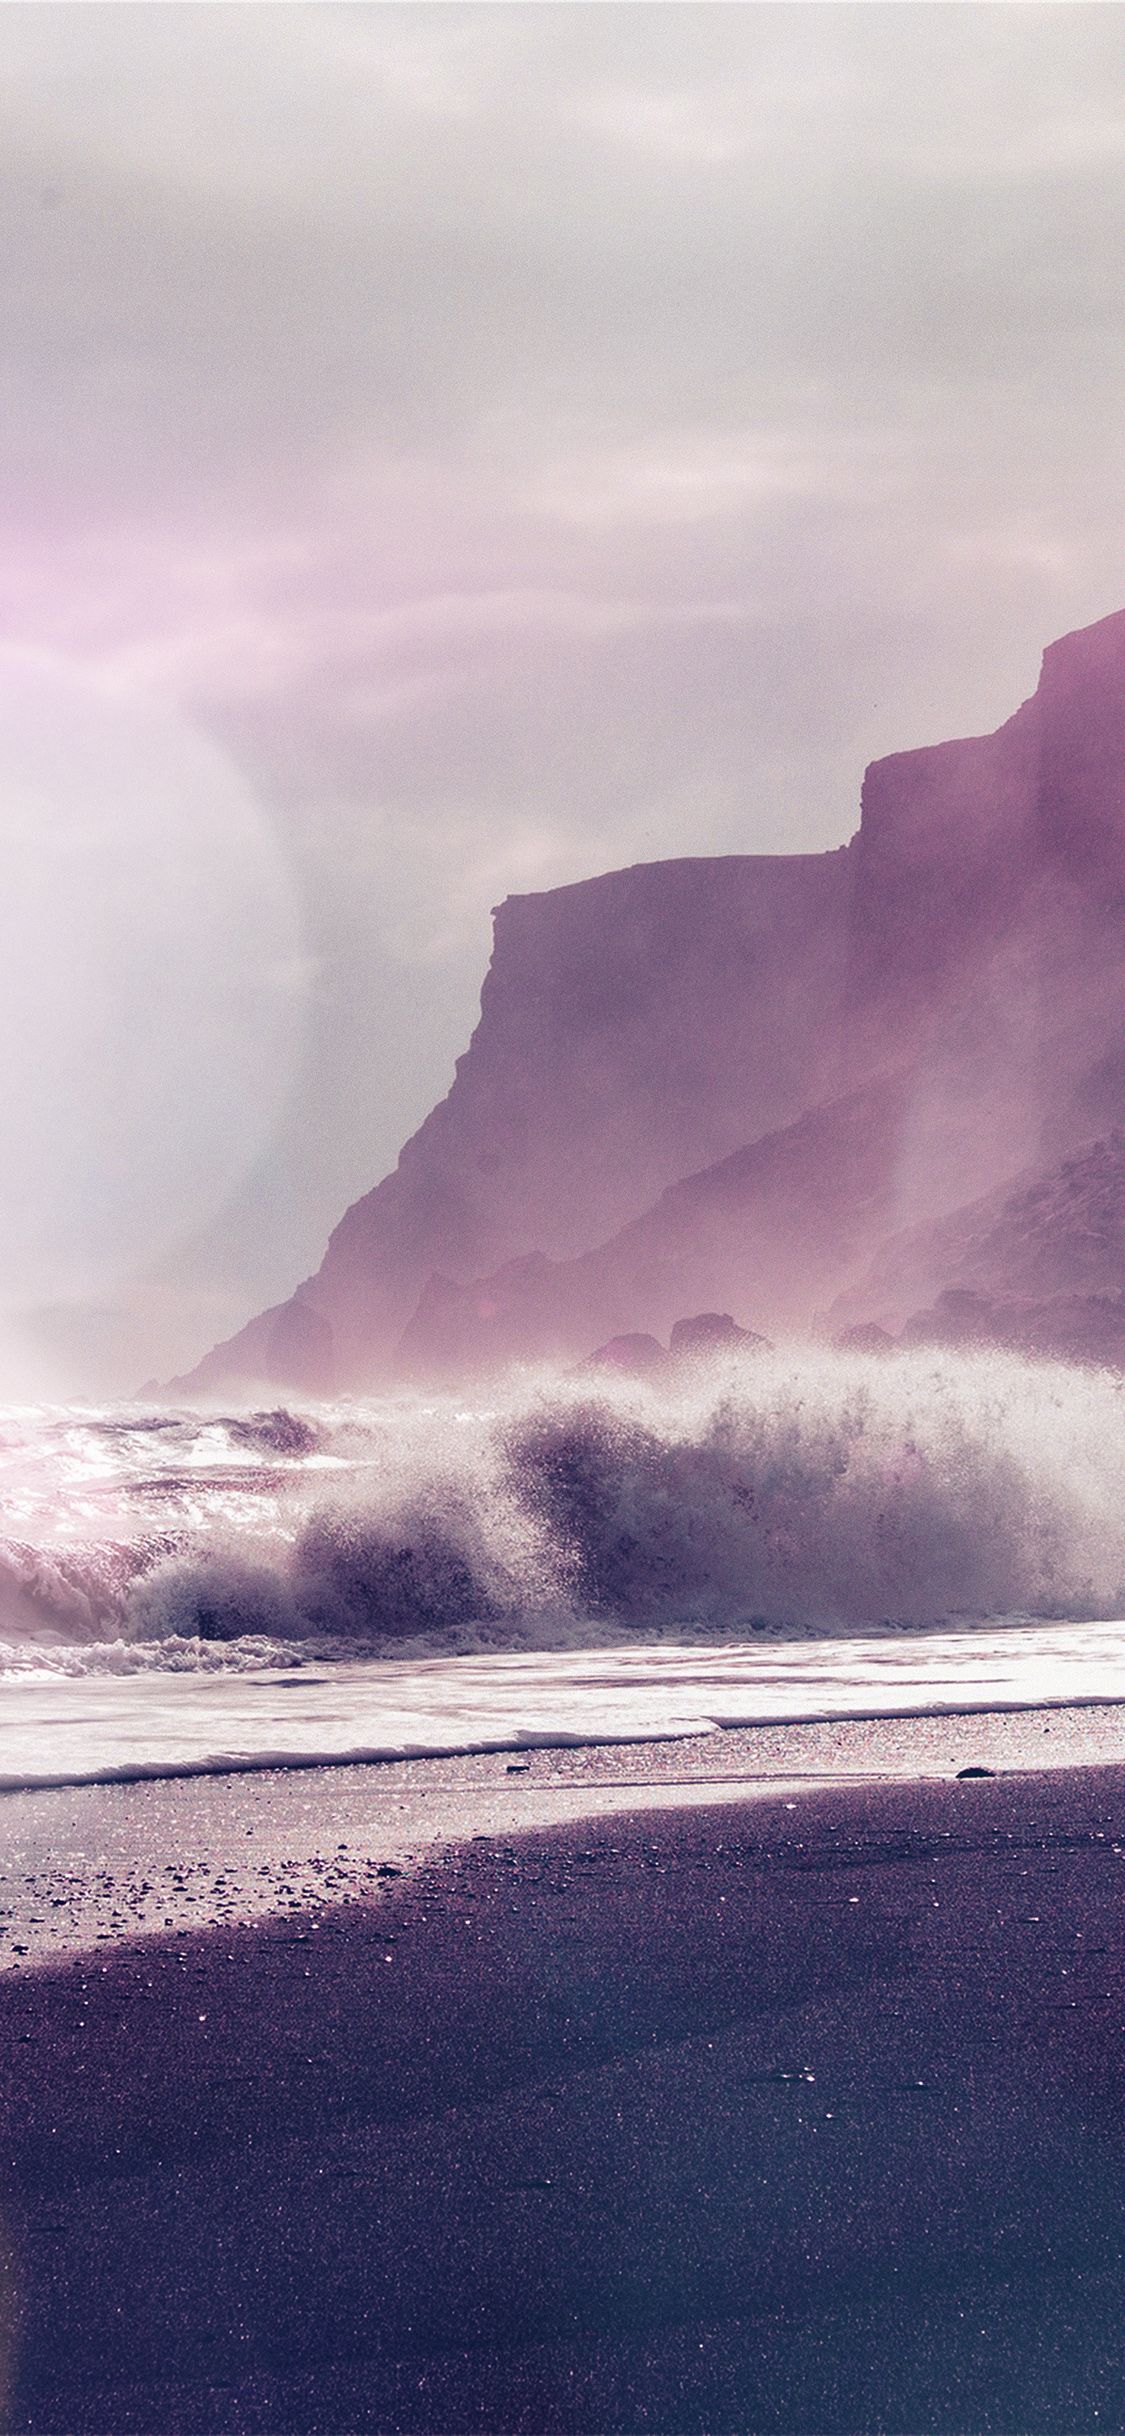 iPhone X wallpaper. sea beach nature purple flare